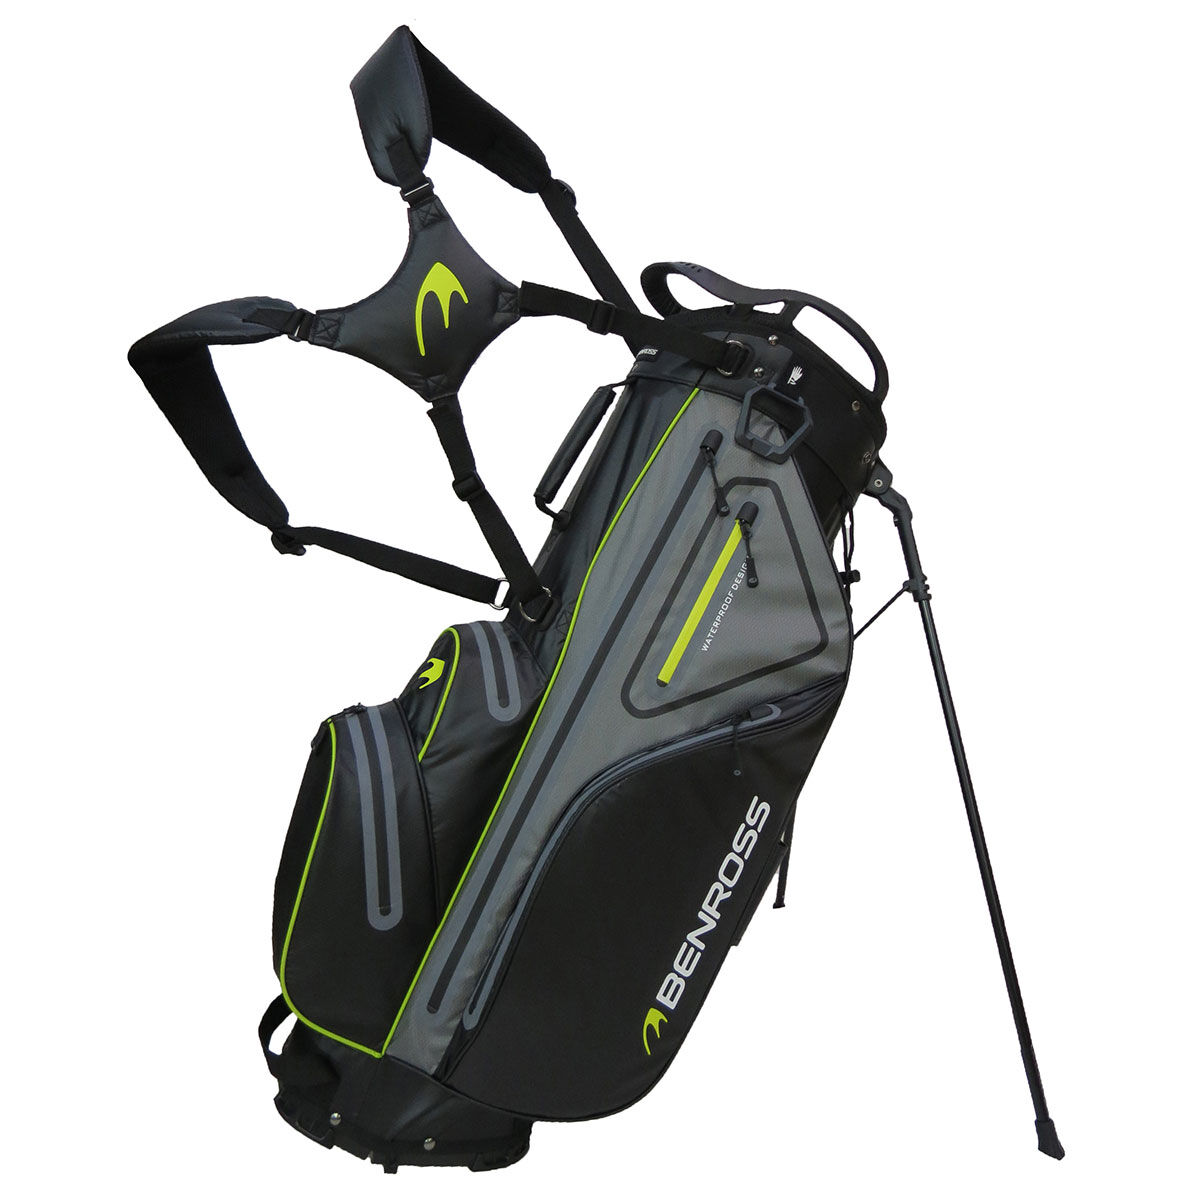 Benross Protec 5.0 Waterproof Golf Stand Bag, Black/charcoal/lime | American Golf von Benross